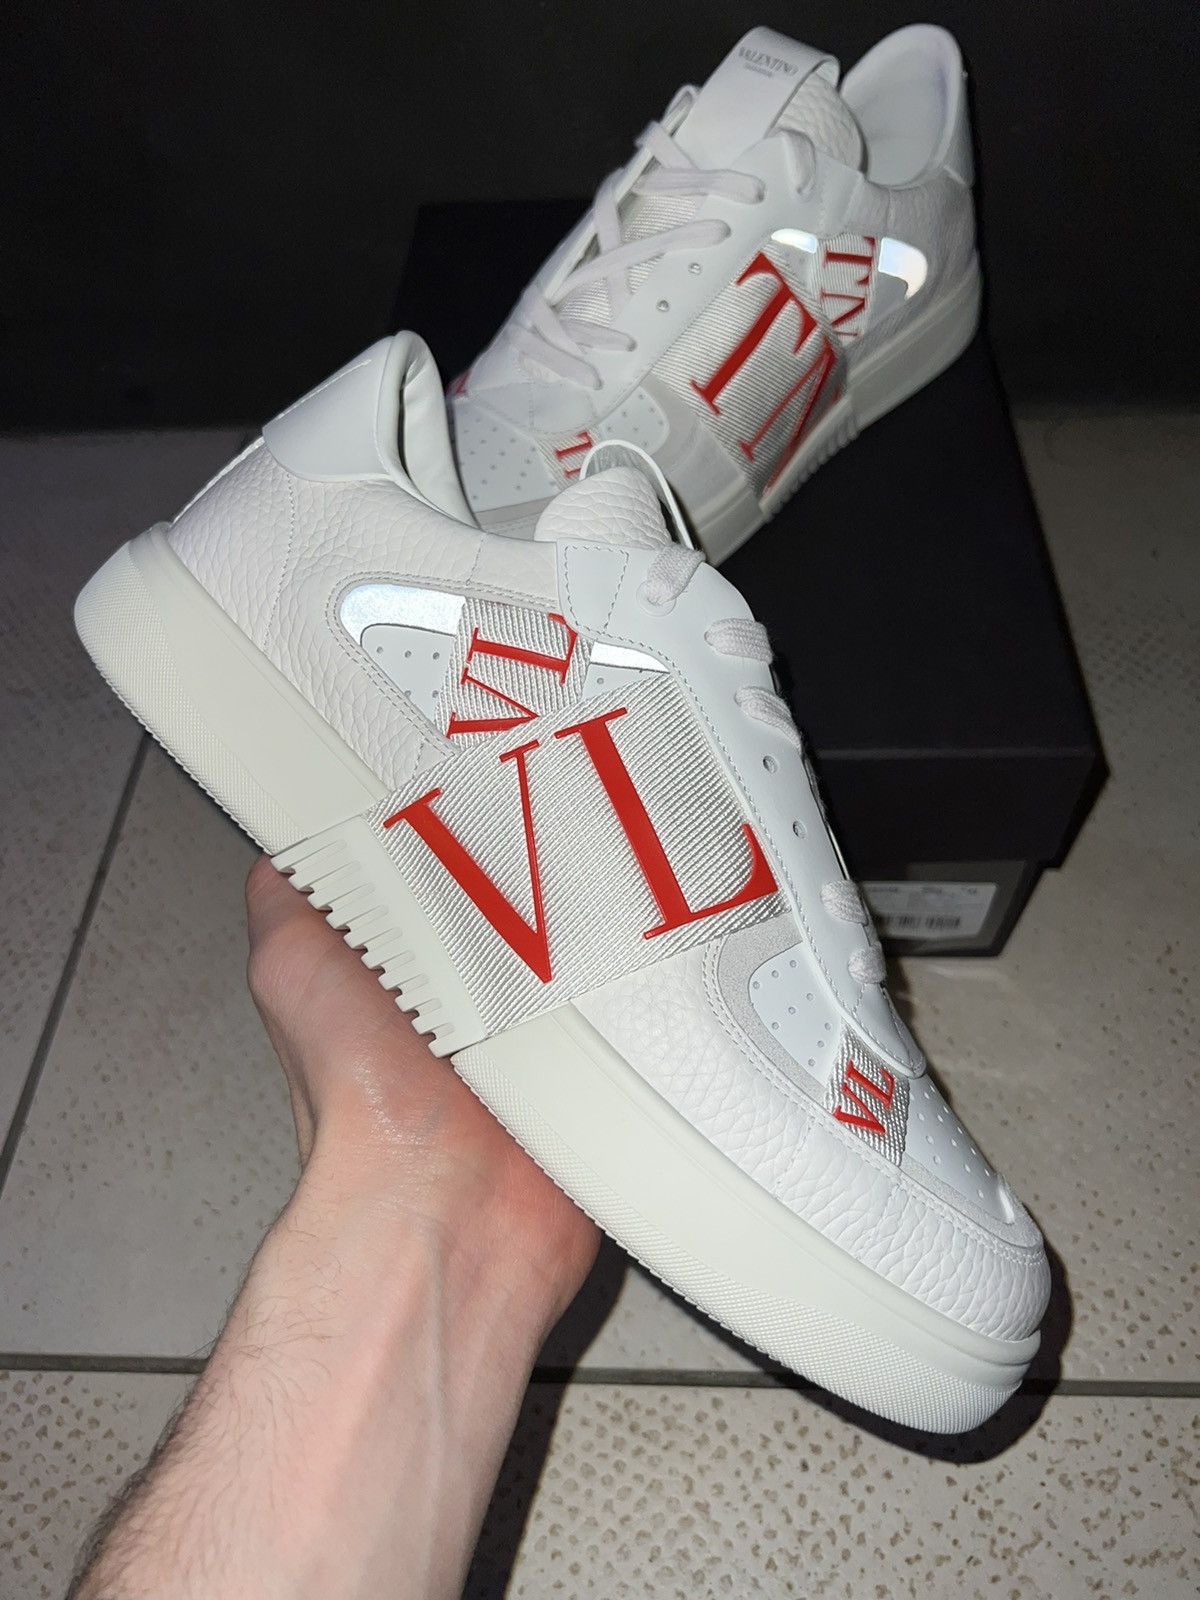 Valentino Valentino VL7N white ice red | Grailed